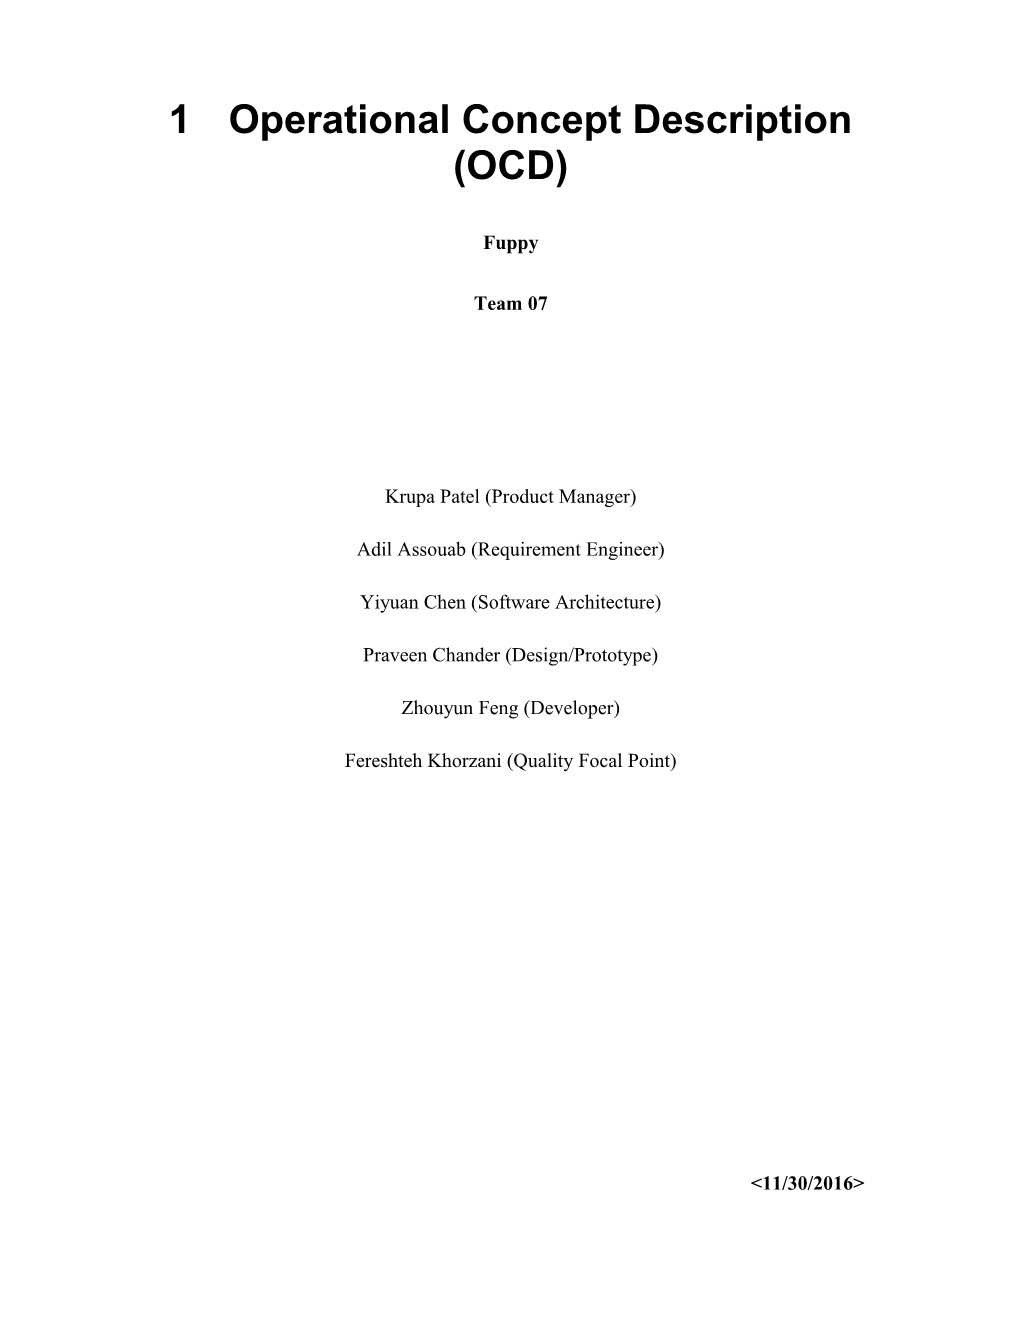 Operational Concept Description (OCD) for Architected Agile Templateversion 1.3